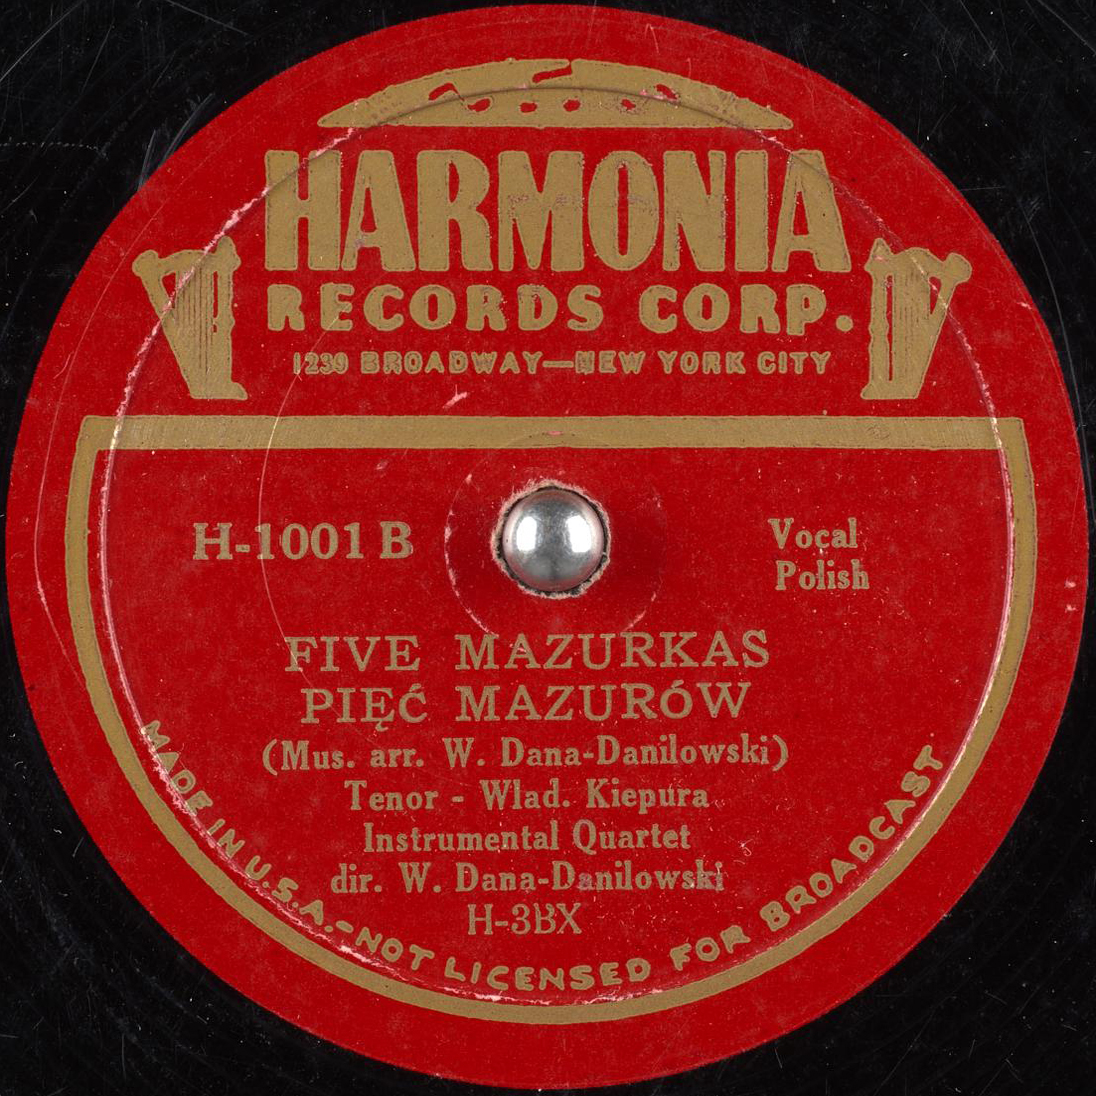 Harmonia Records Corp.